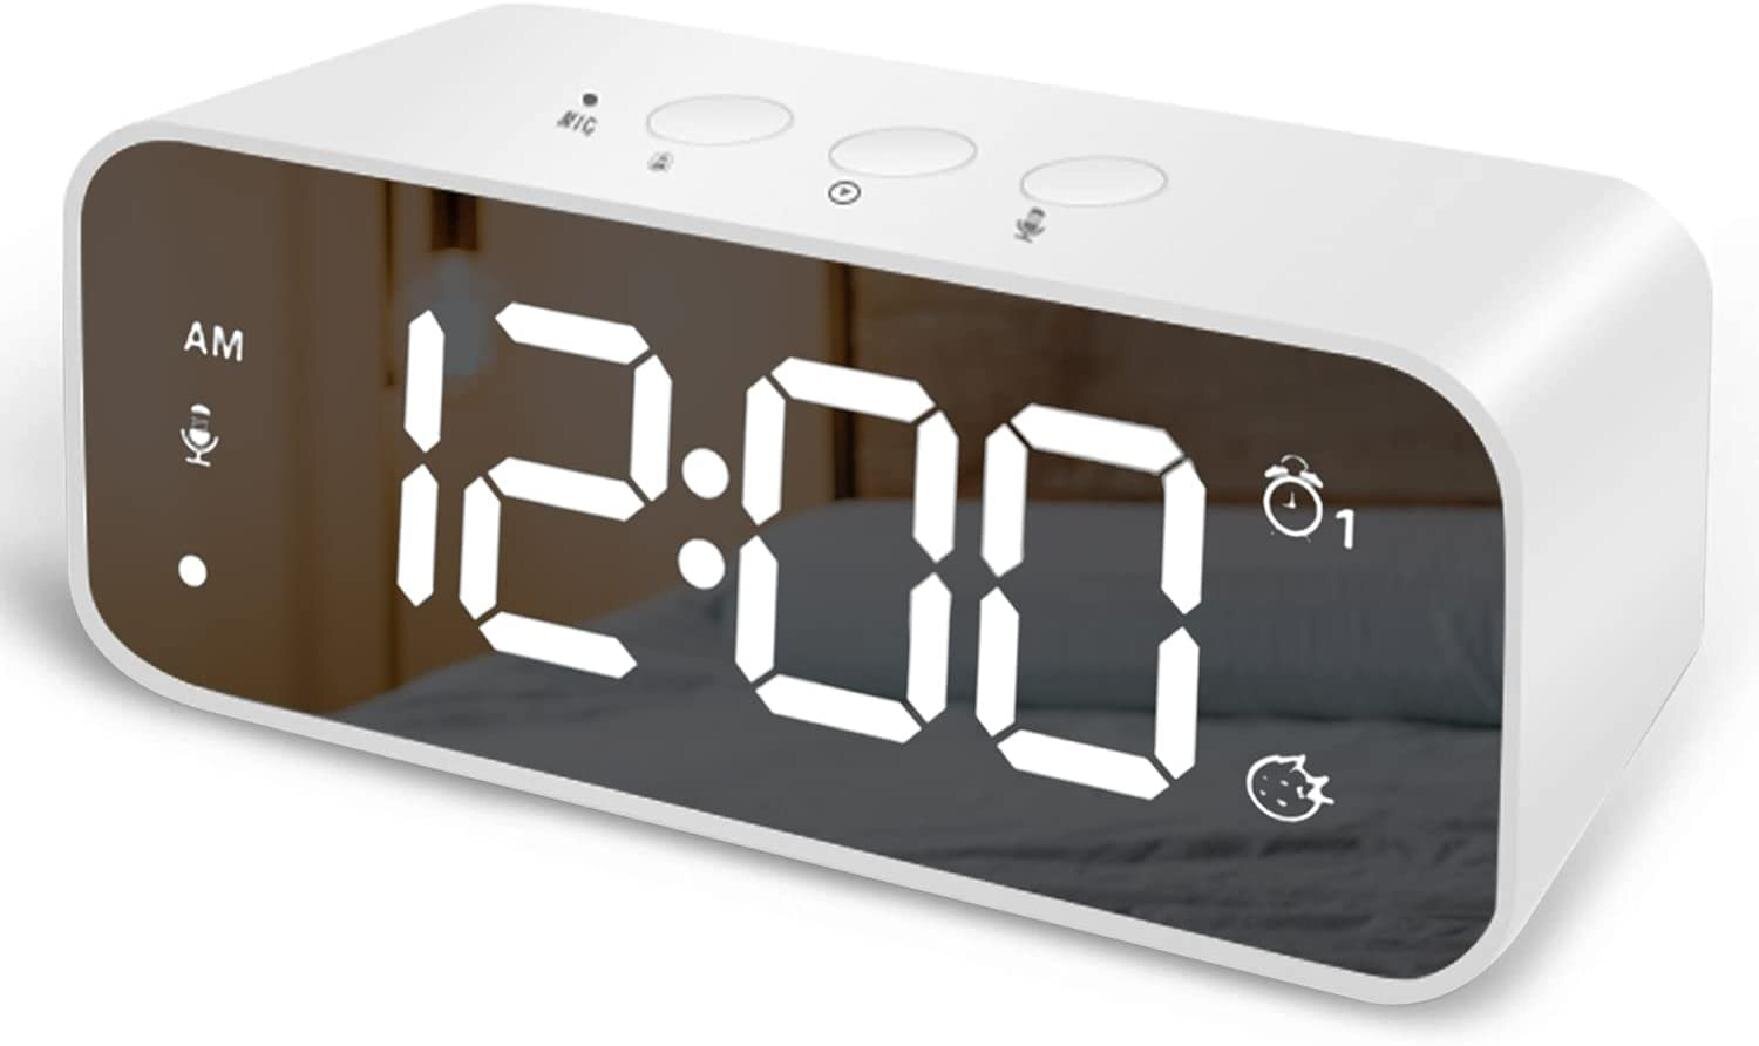 Digital LED Large Display Alarm Clock Travel USB/Battery Operated Mirror New 